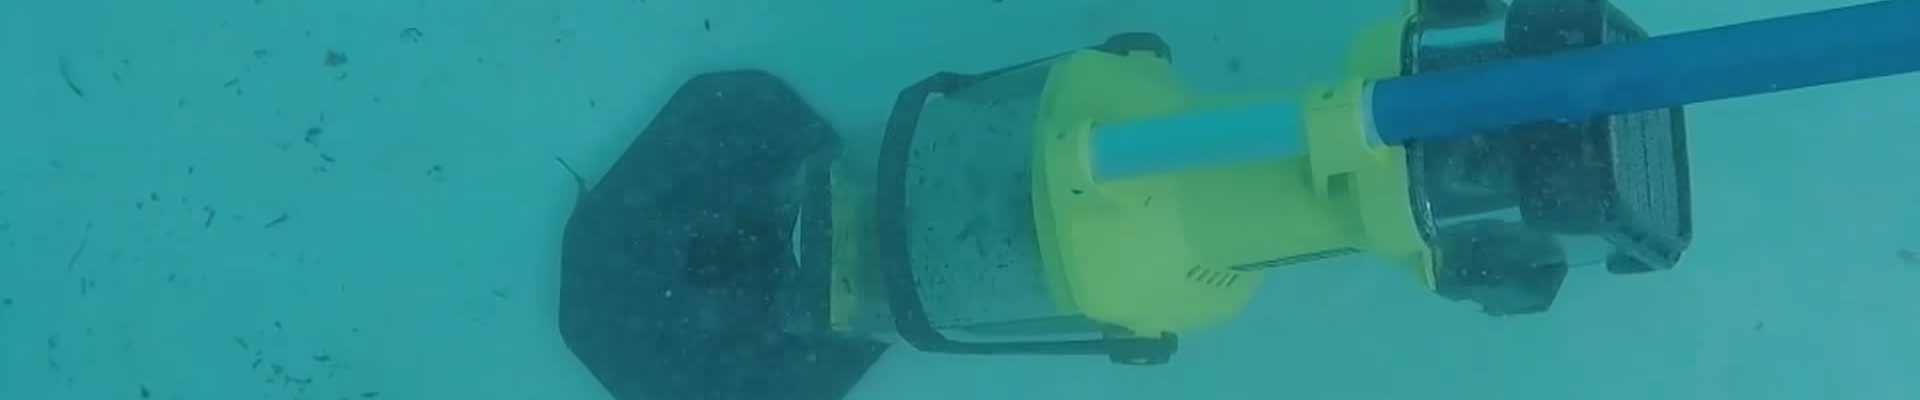 Ryobi-18v-ONE+-Underwater-Stick-Pool-Vacuum-Cleaner